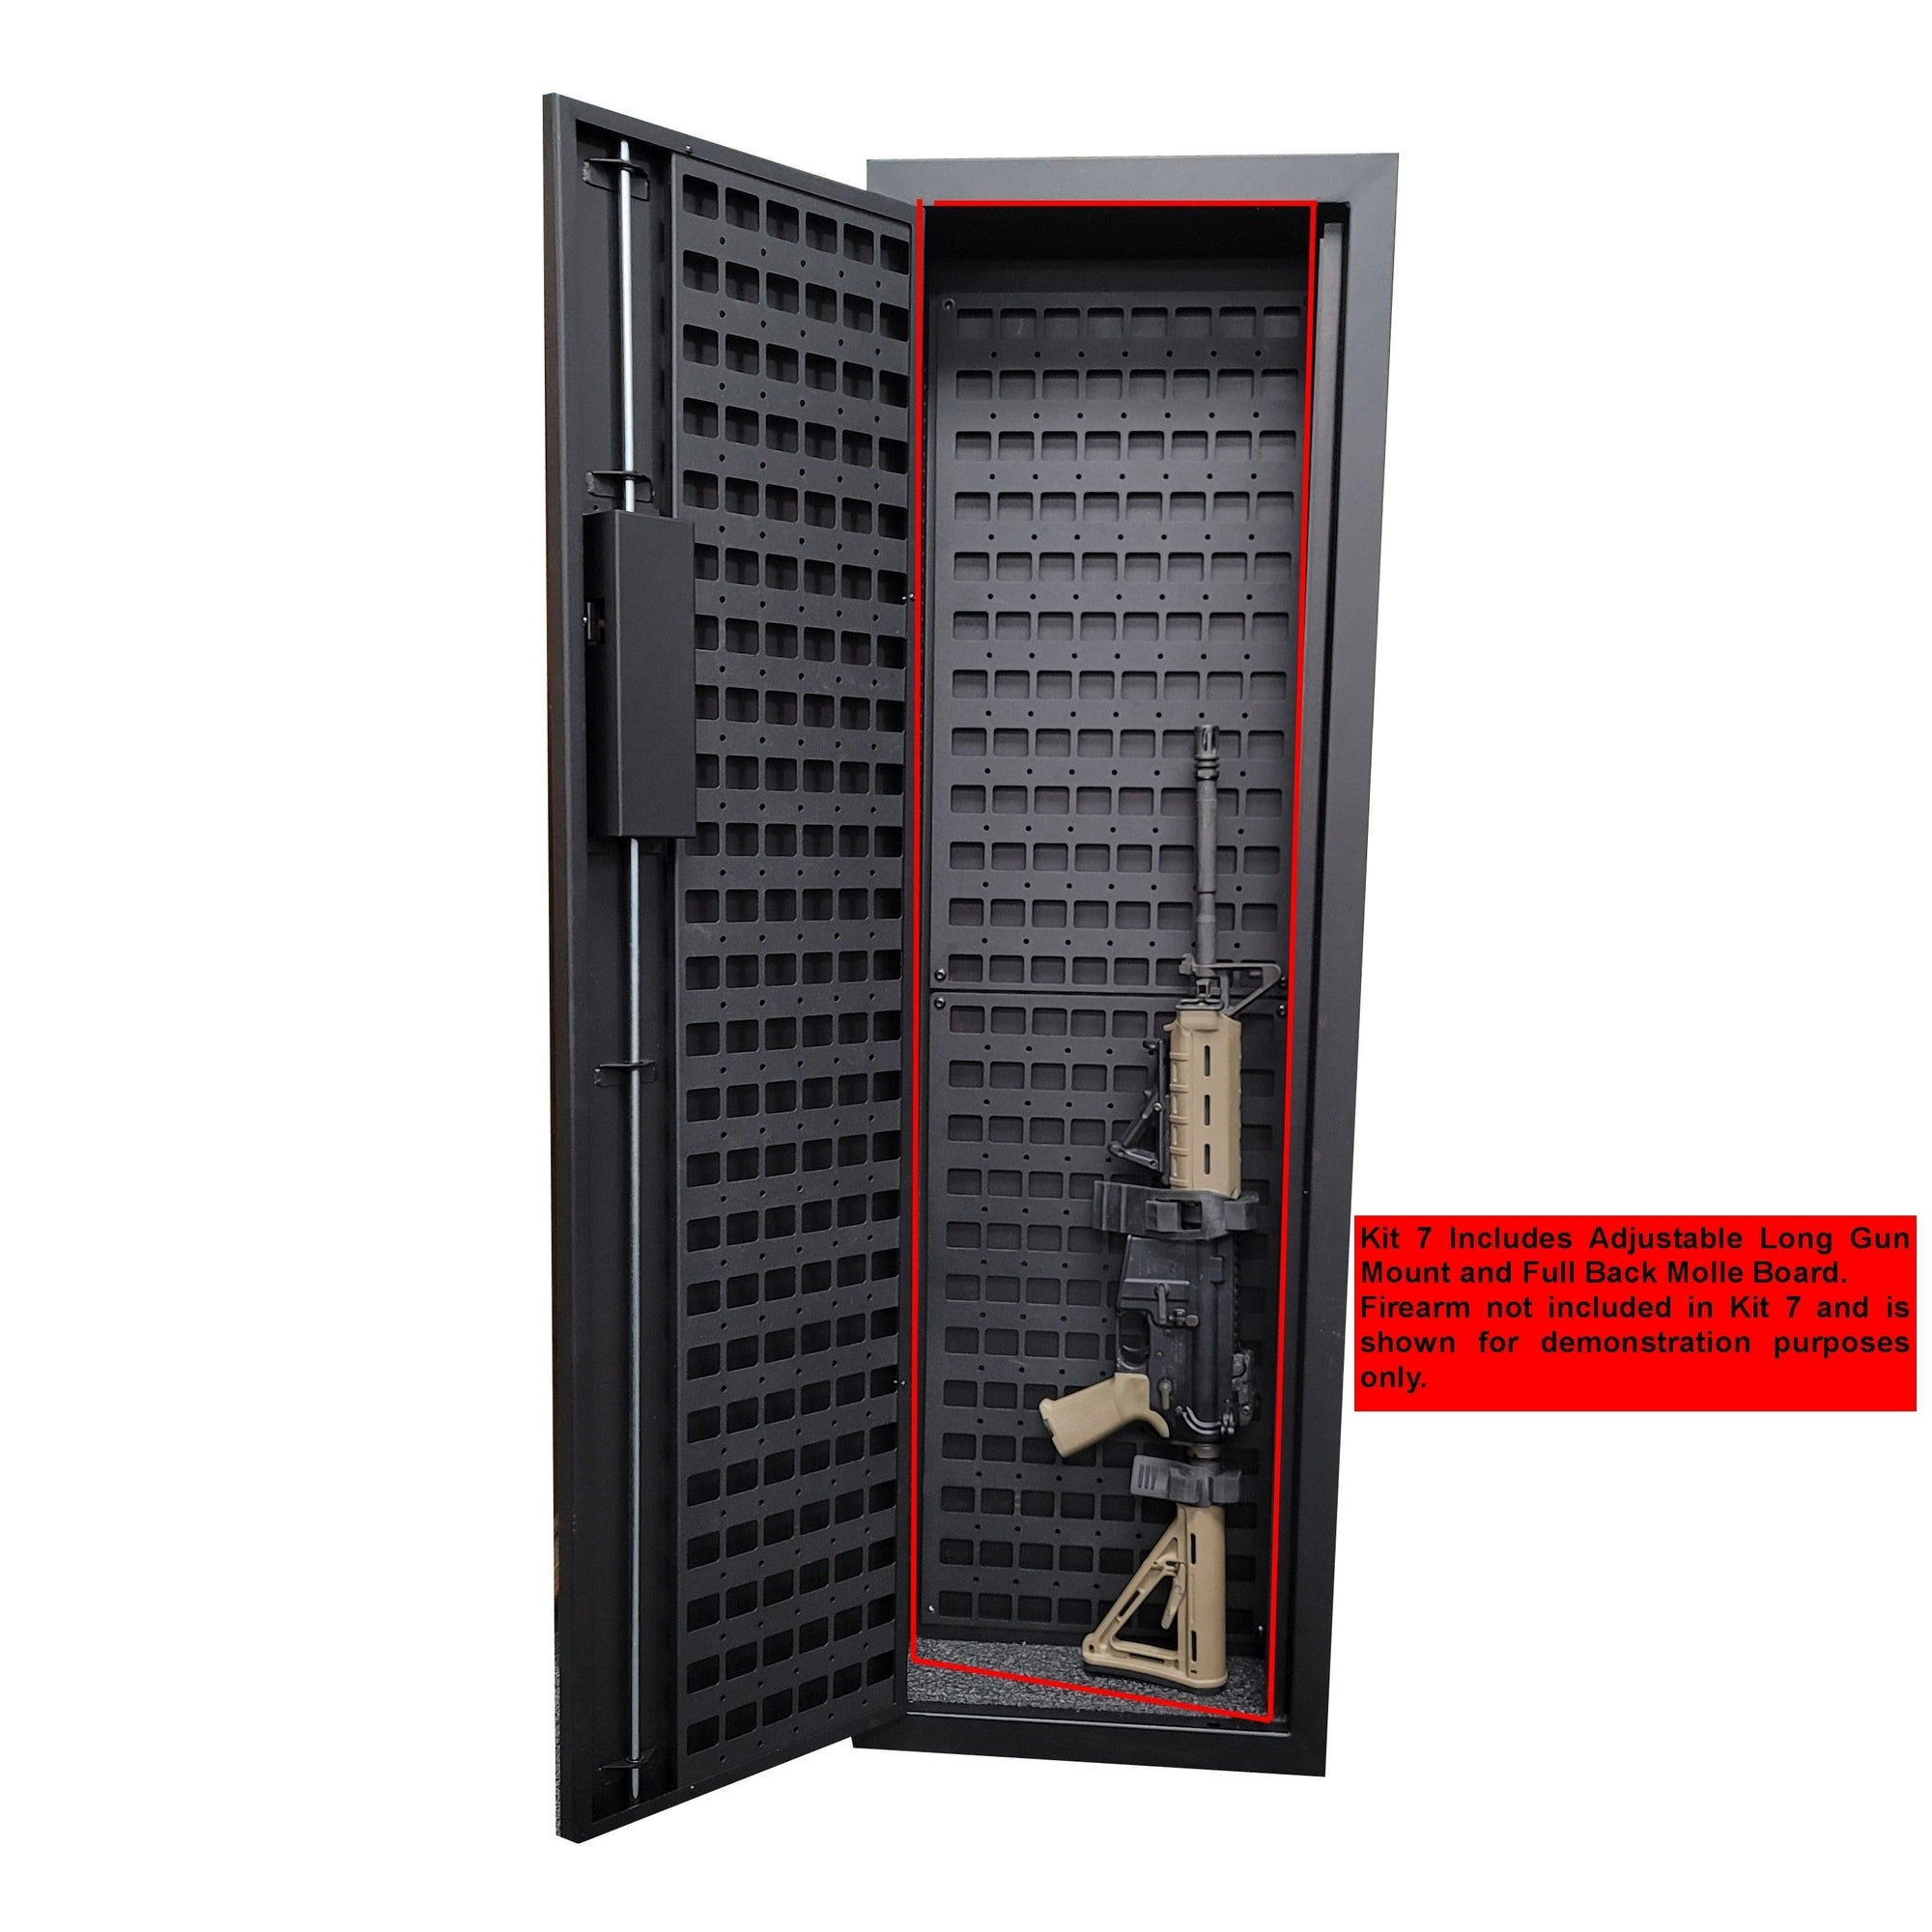 V-Line Accessories - V-Line Tactical Closet Vault Kit 7